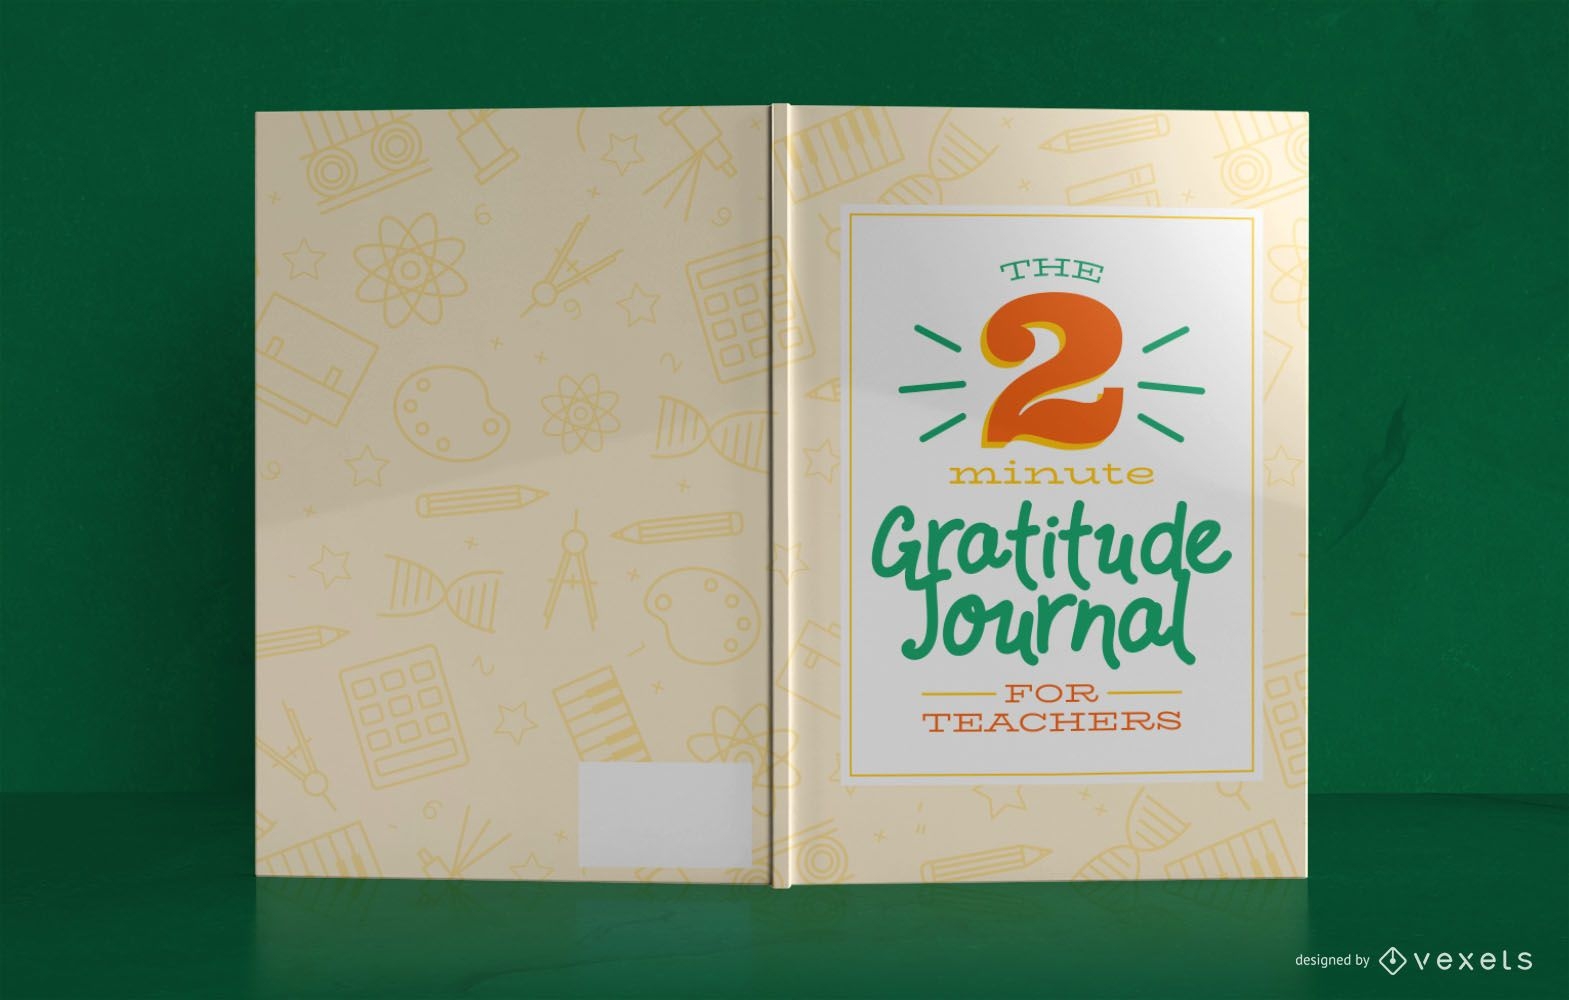 teacher-gratitude-journal-book-cover-design-vector-download